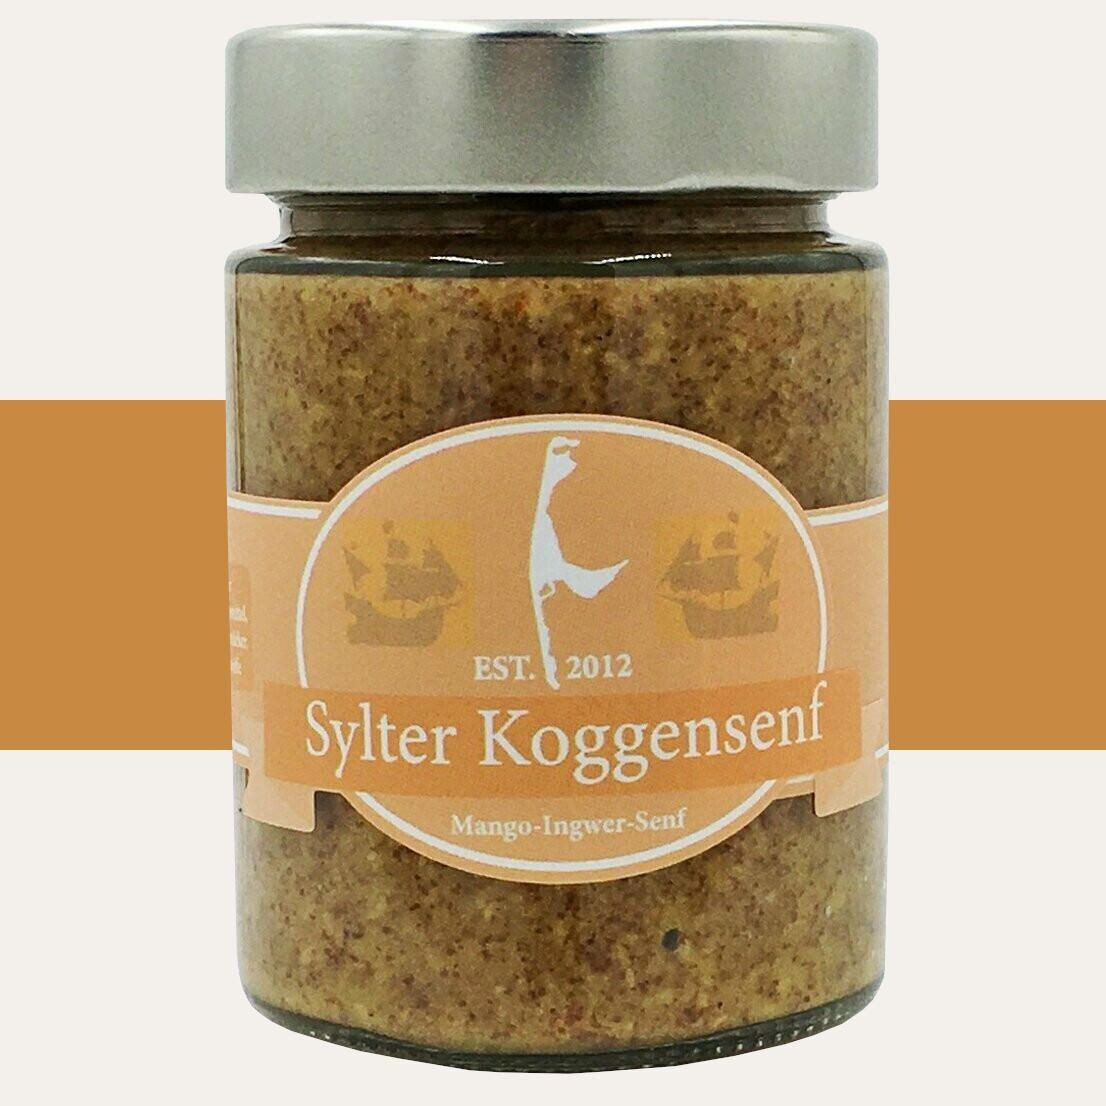 Sylter Koggensenf - Mango-Ingwersenf